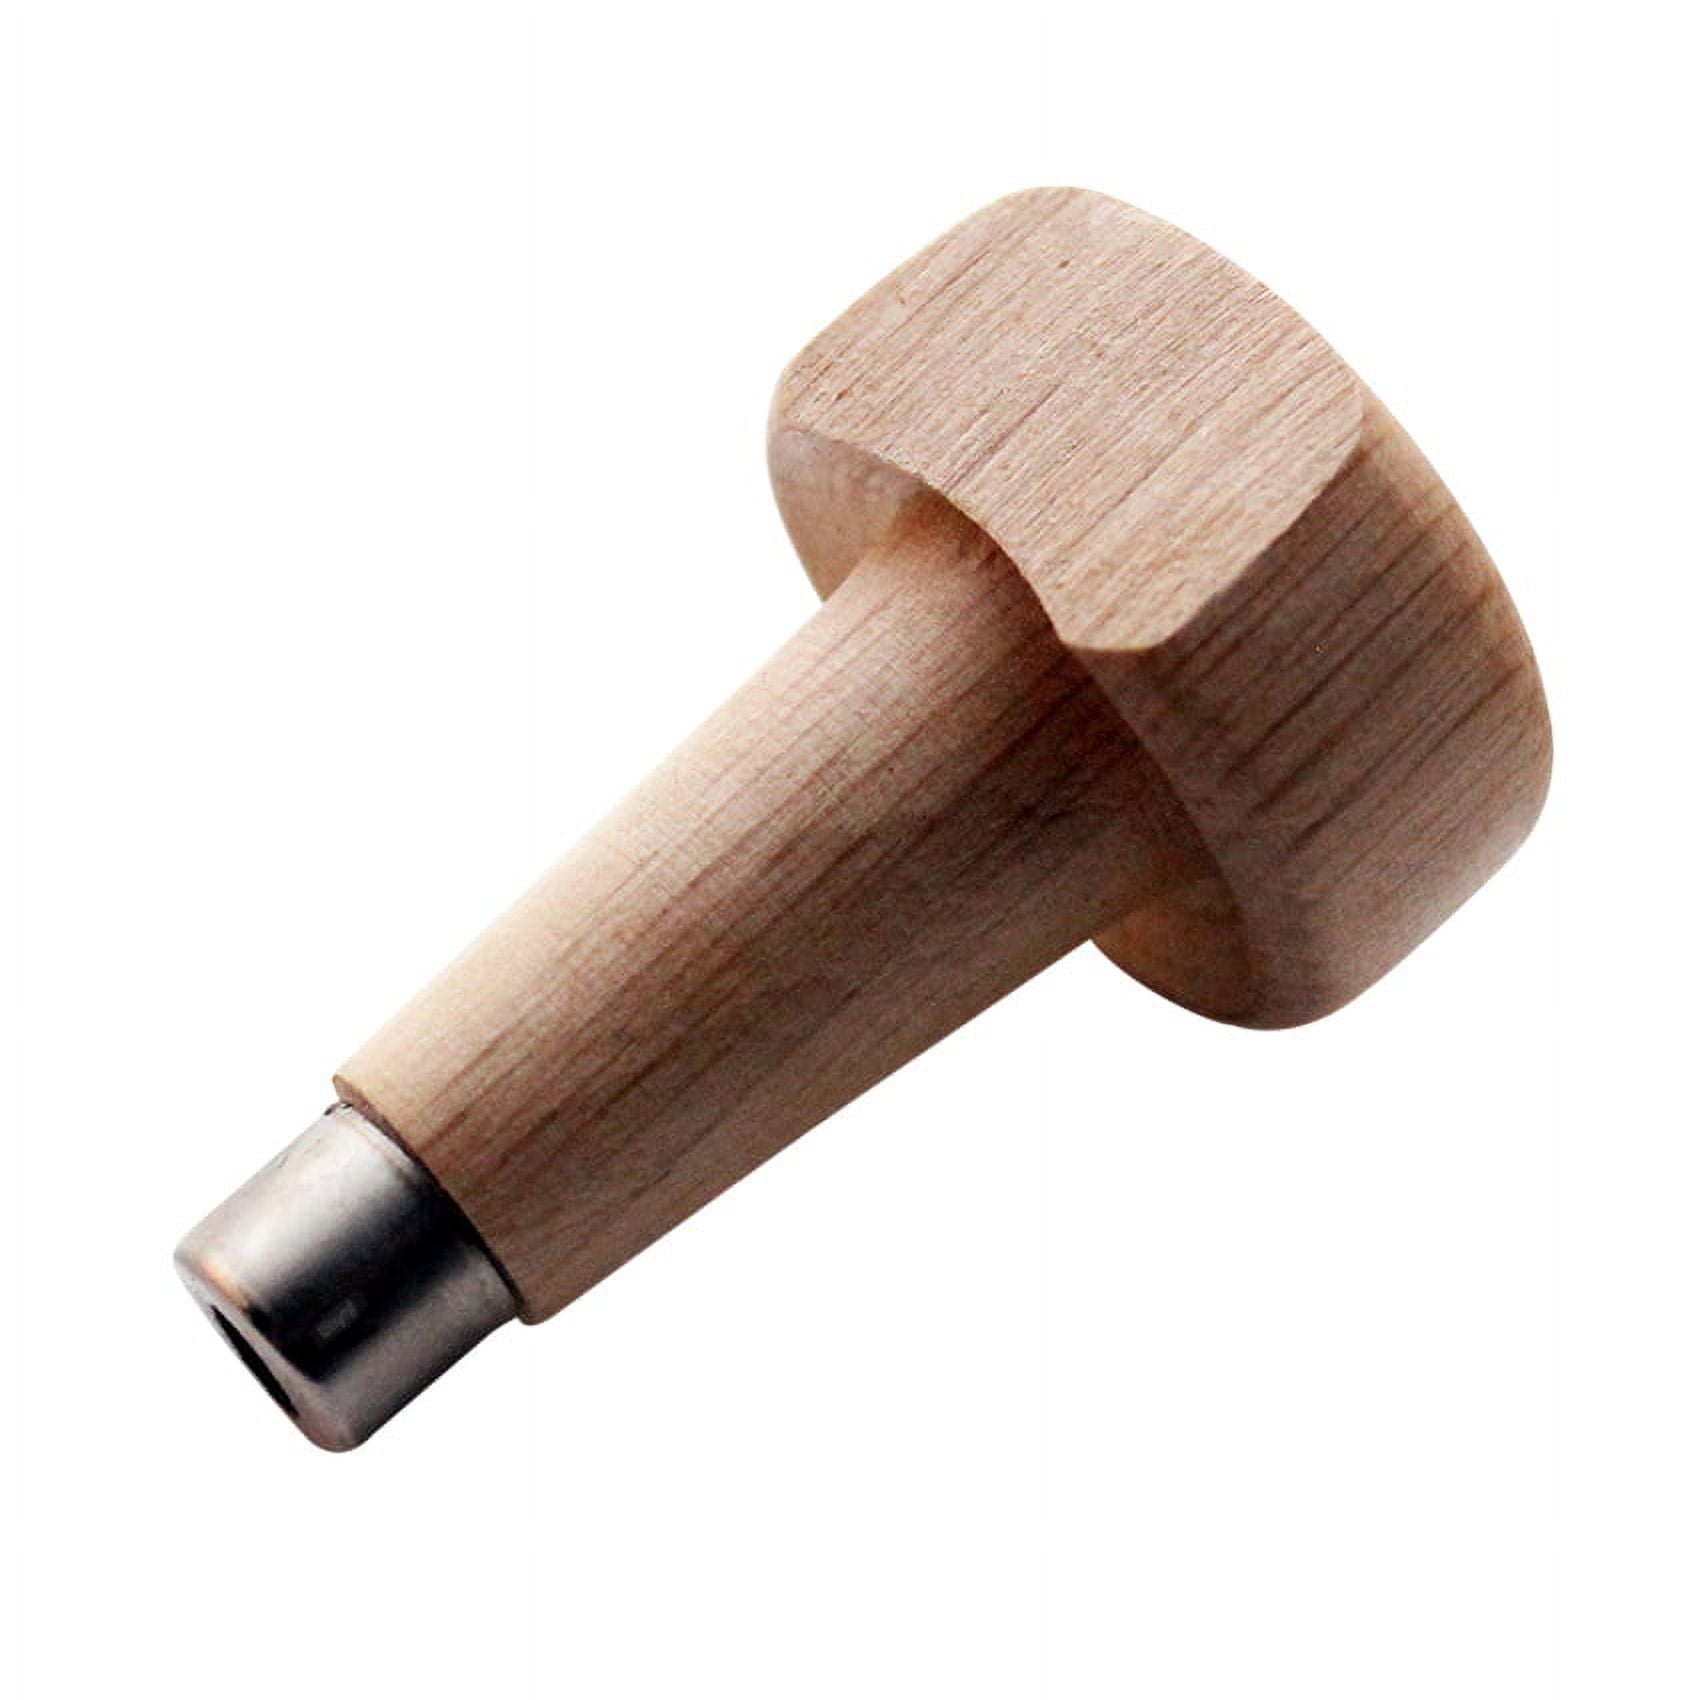 Basswood Carving Blocks,Wood Carving Blocks - Large Beginner's Premium Wood  Carving/Whittling Kit, Suitable for Beginner to Expert - 12 Pcs 